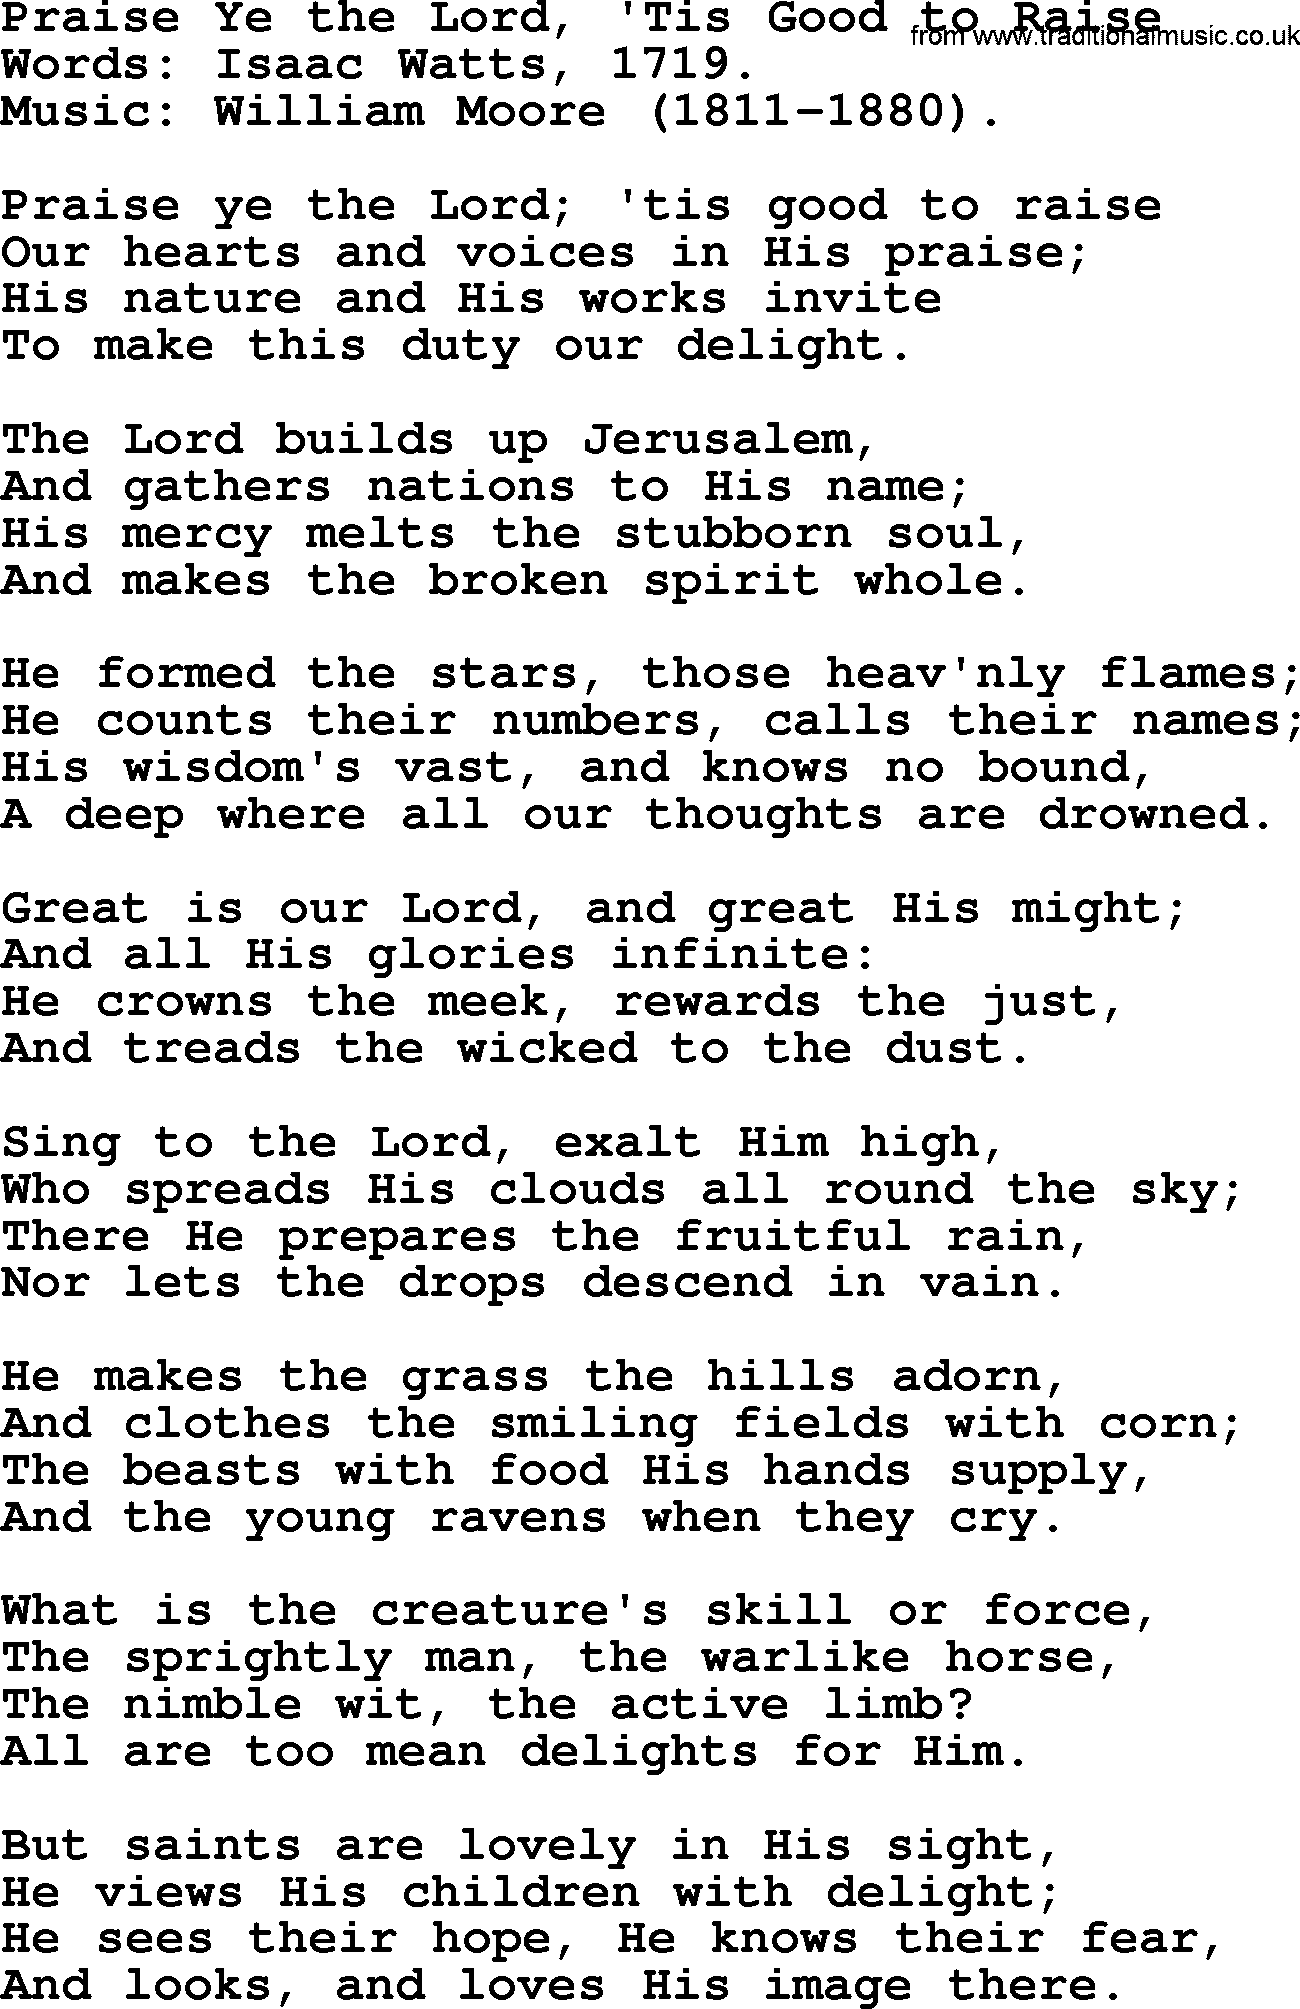 Isaac Watts Christian hymn: Praise Ye the Lord, 'Tis Good to Raise- lyricss